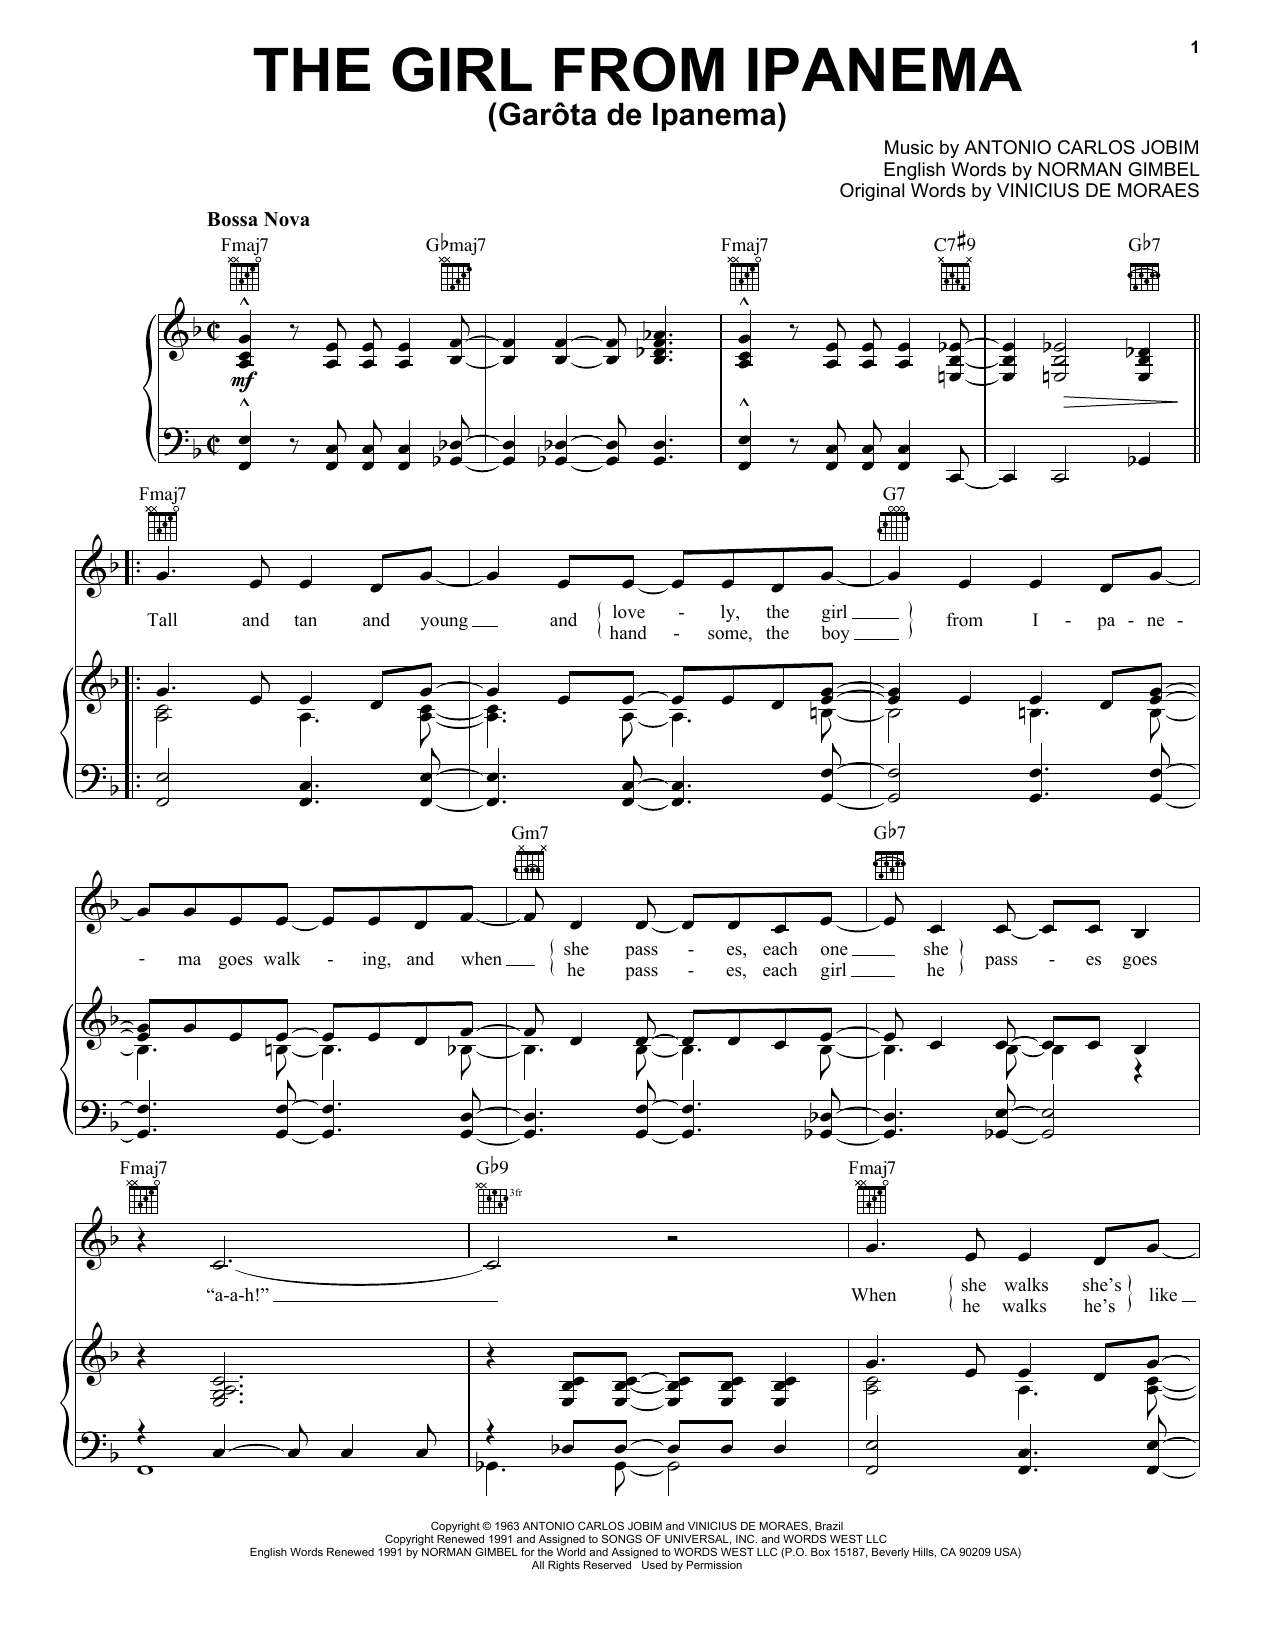 Frank Sinatra The Girl From Ipanema (Garota De Ipanema) Sheet Music Notes & Chords for Easy Piano - Download or Print PDF